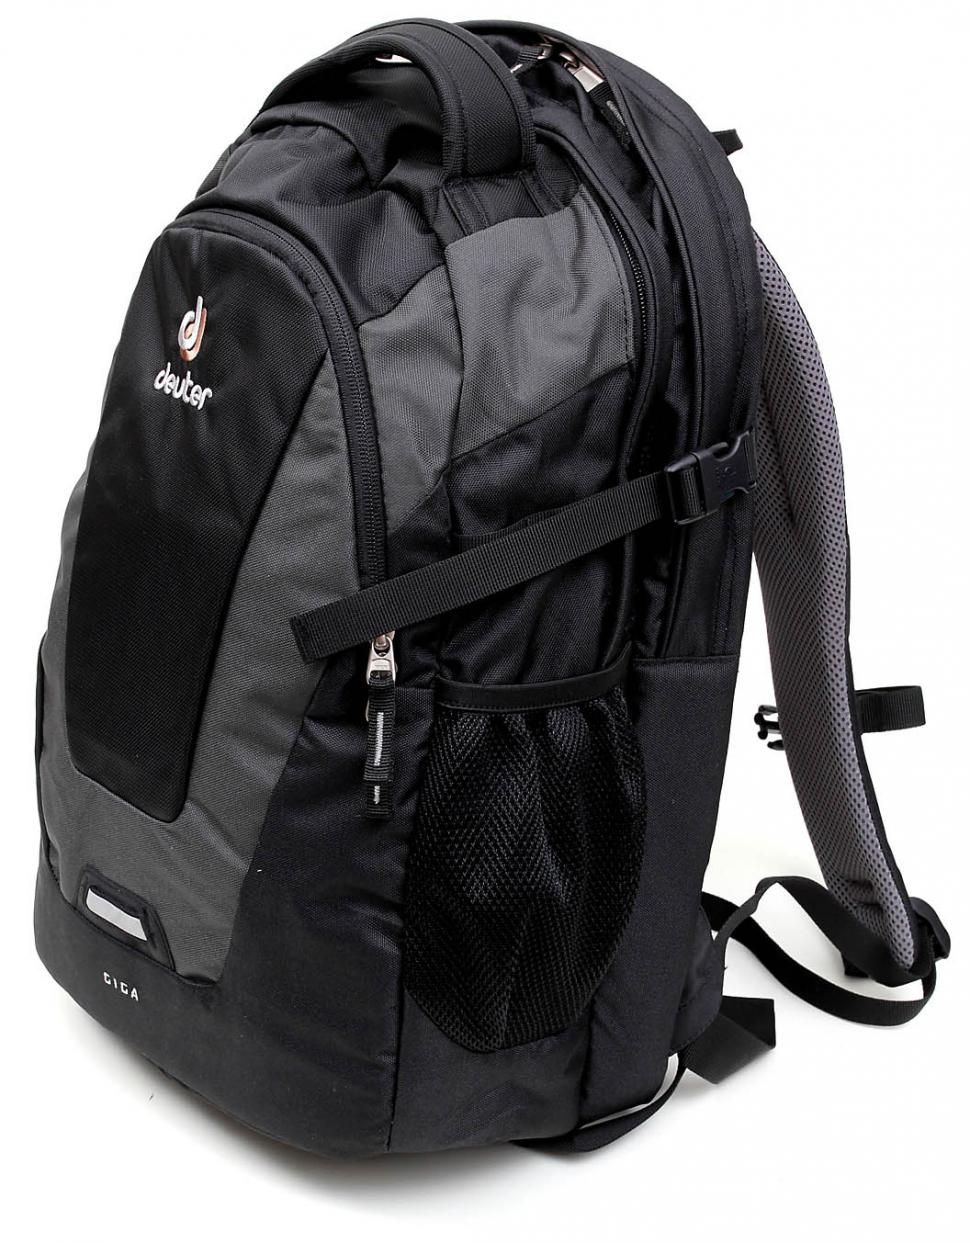 Review: Deuter Giga backpack |